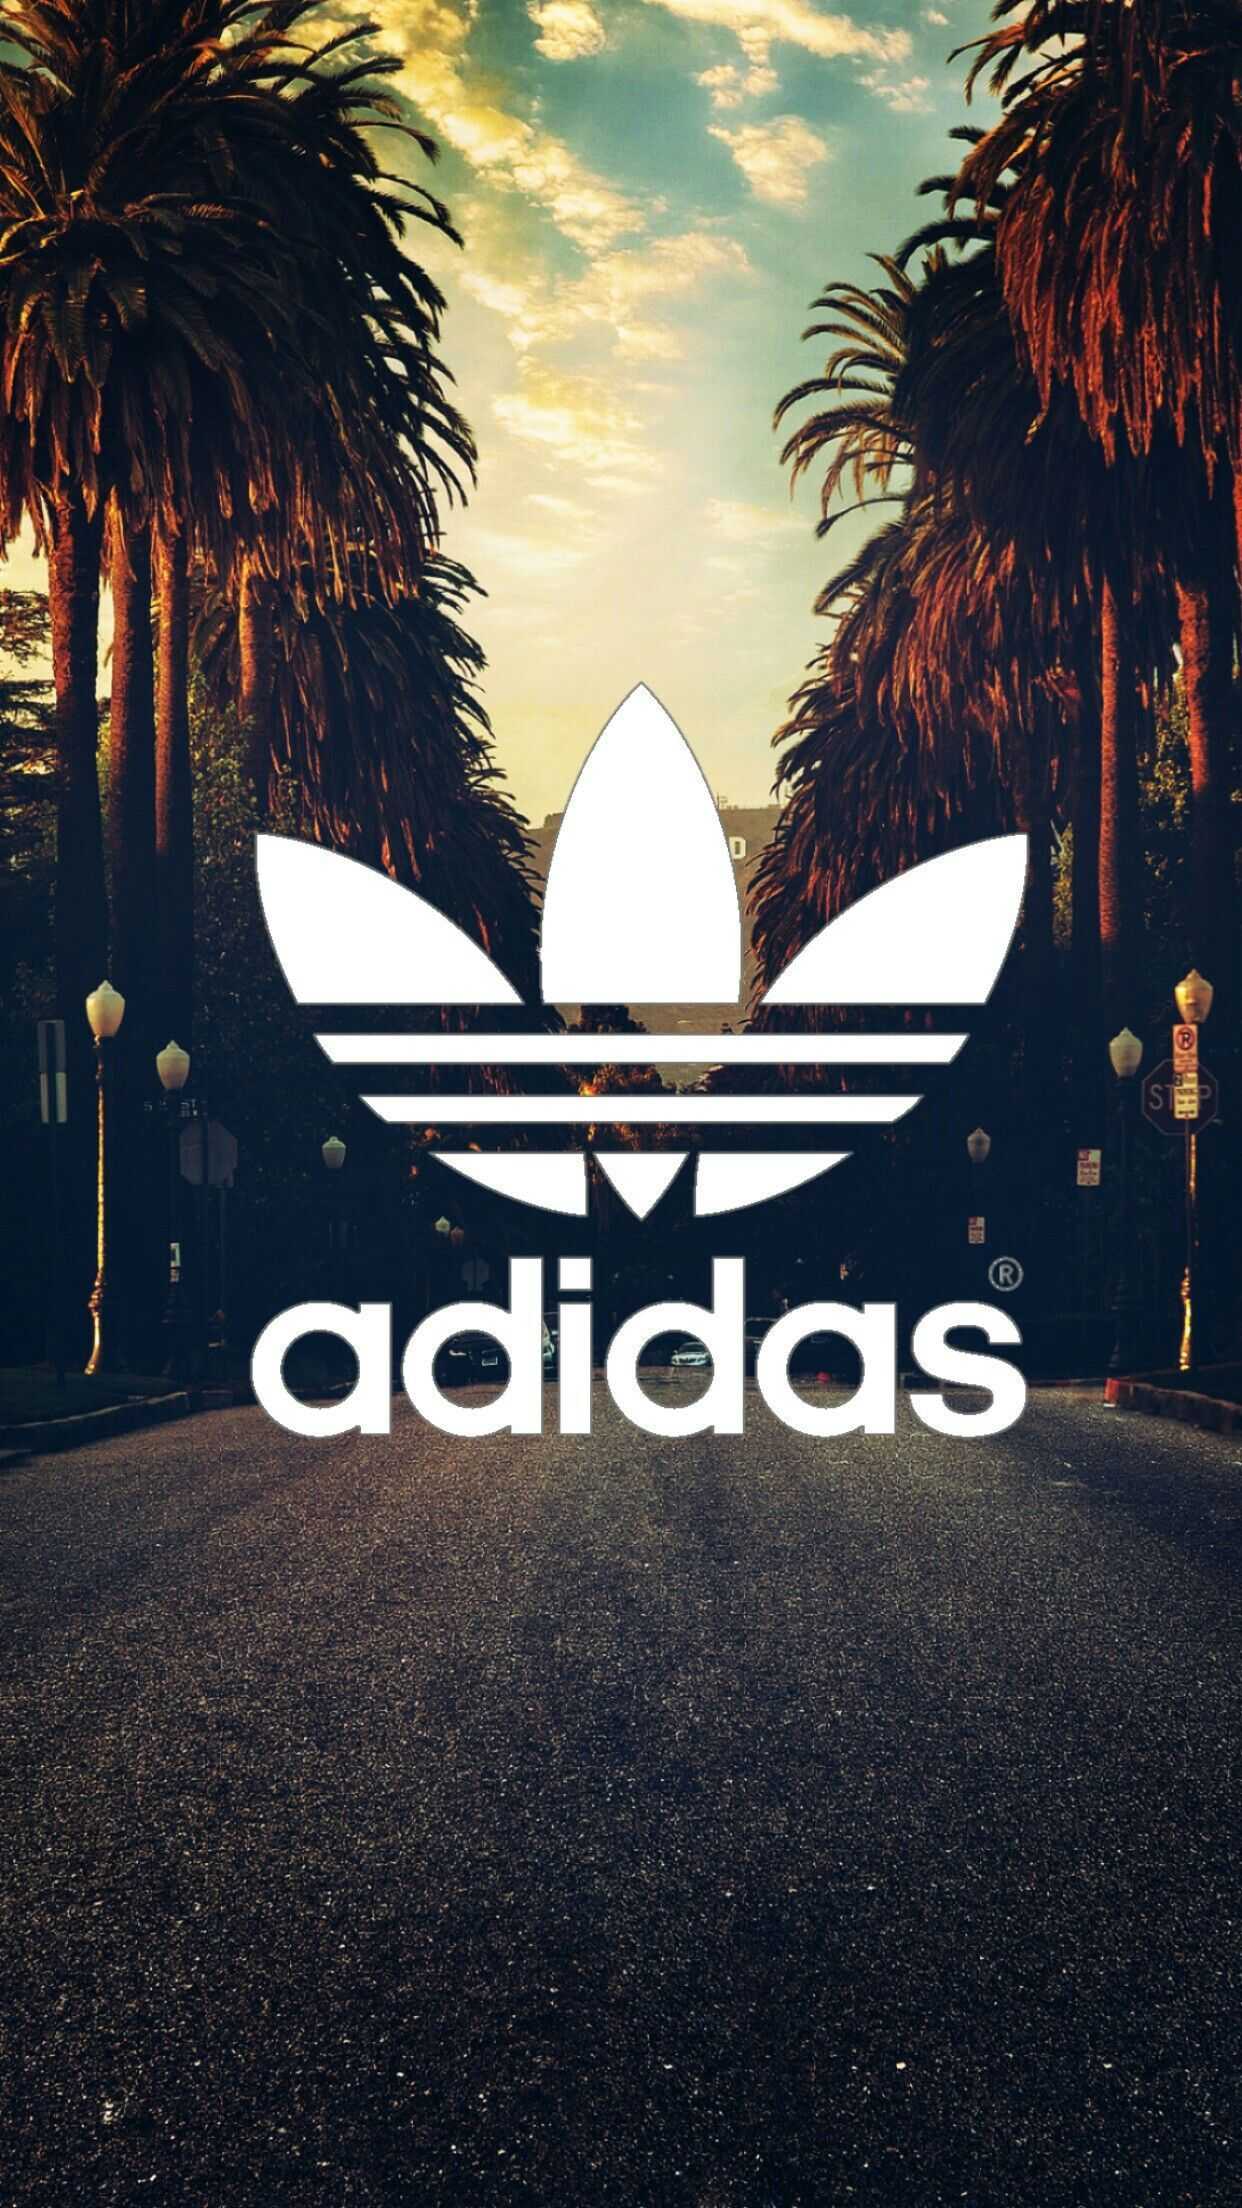 Adidas Logo Wallpapers - Top 25 Best Adidas Logo Wallpapers Download